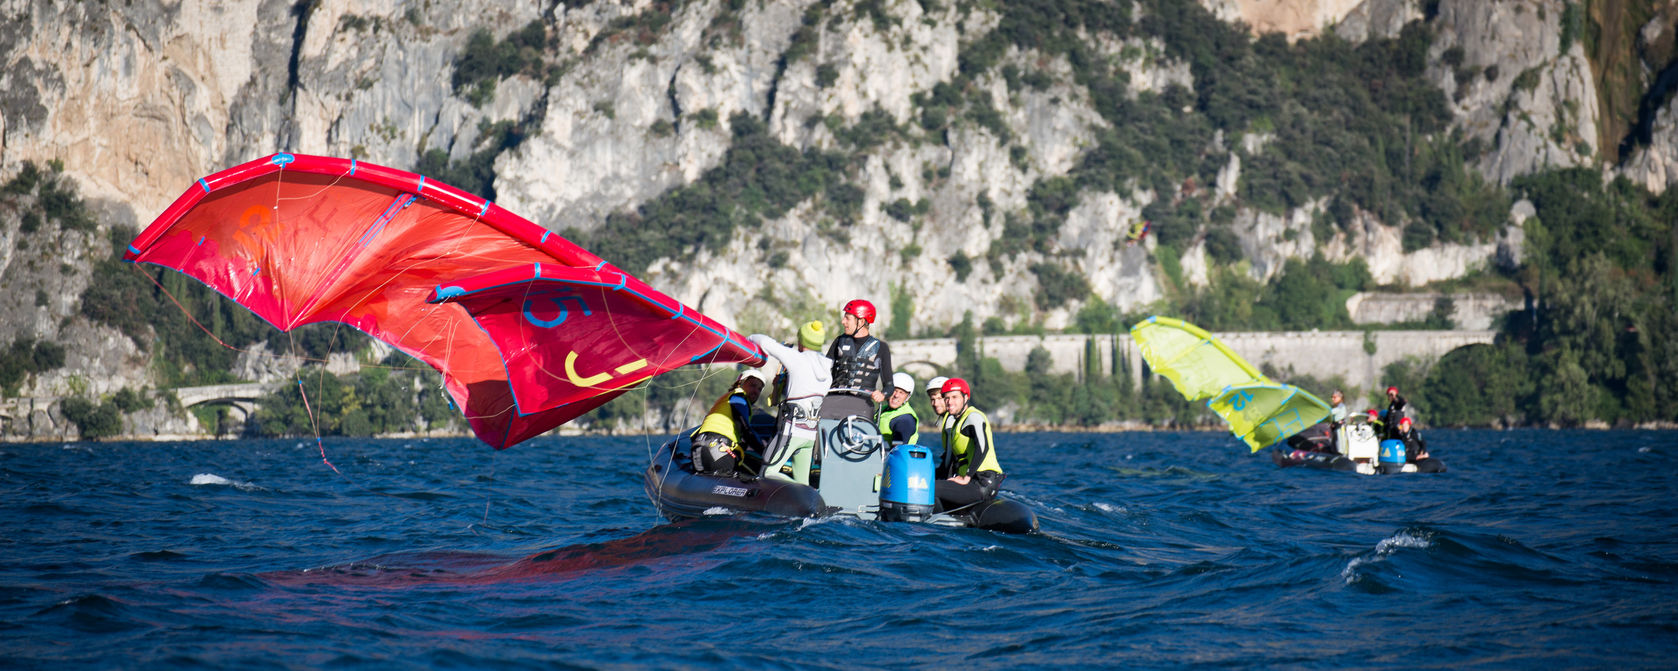 Kitesurfing course Italy Lake Garda